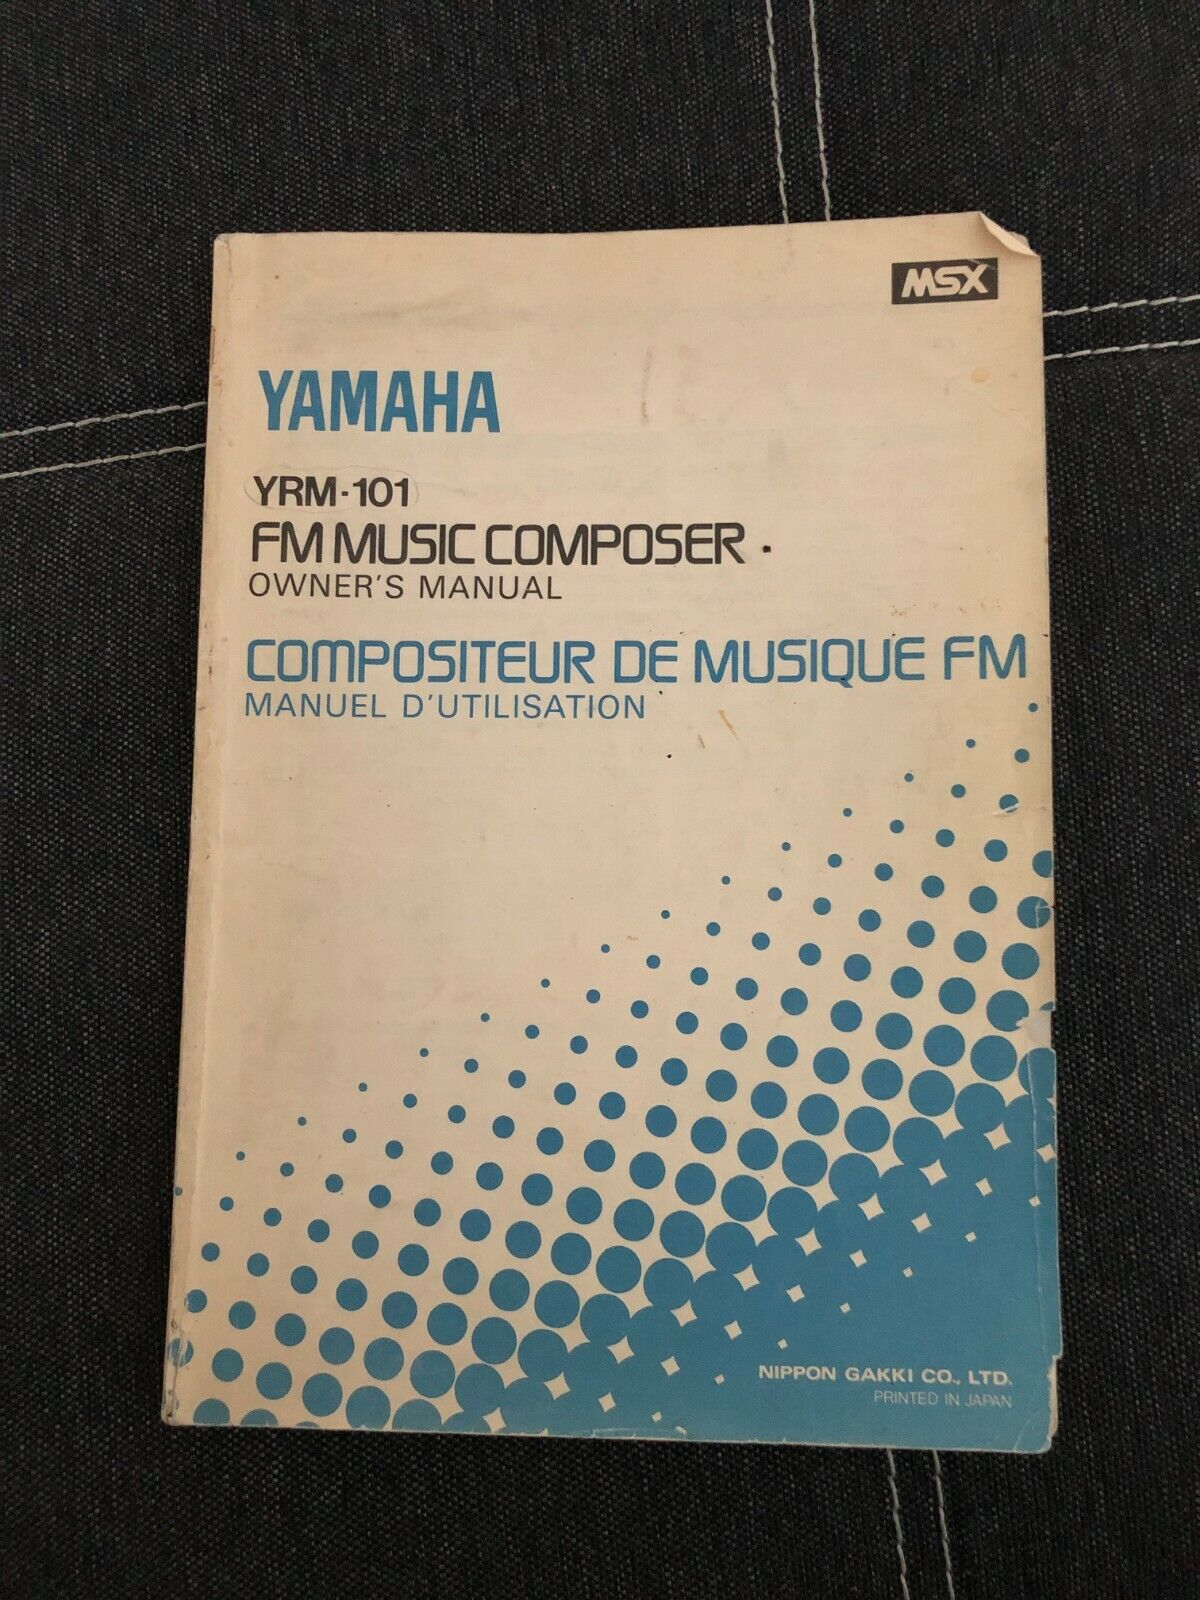  Yamaha CX5MII 128 Music Computer MSX - manual